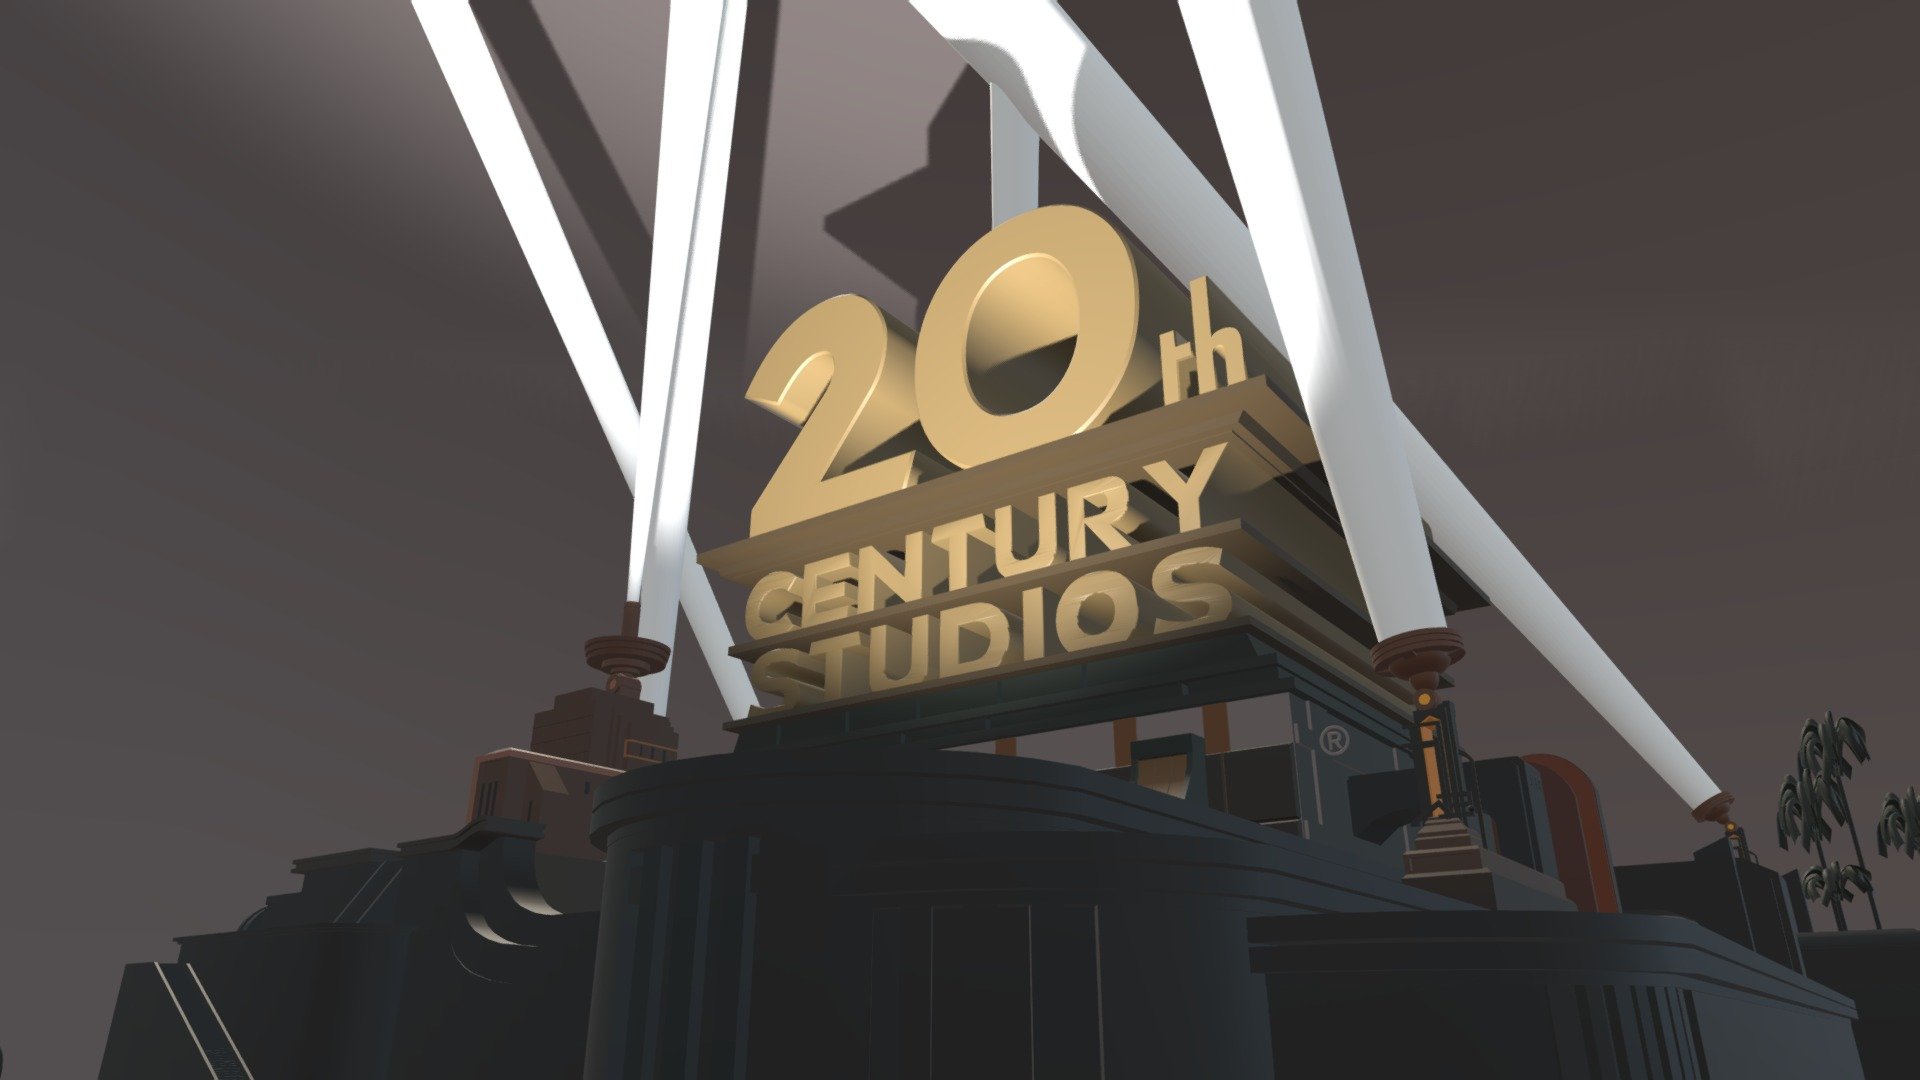 20th century studios 2020 logo - 3D model by Fox Model 387 (@vincep3612